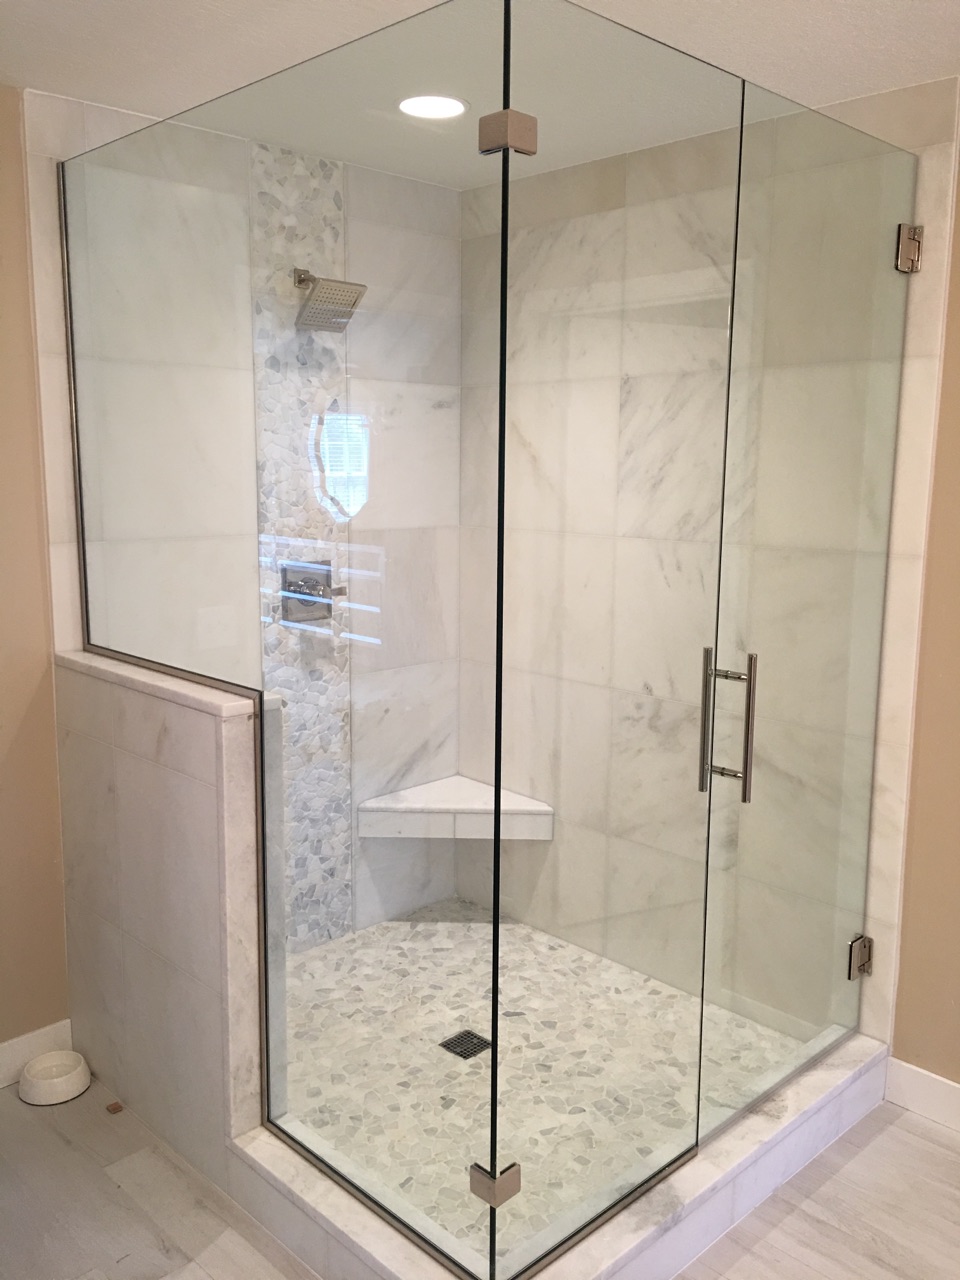 Mirrored shower enclosure